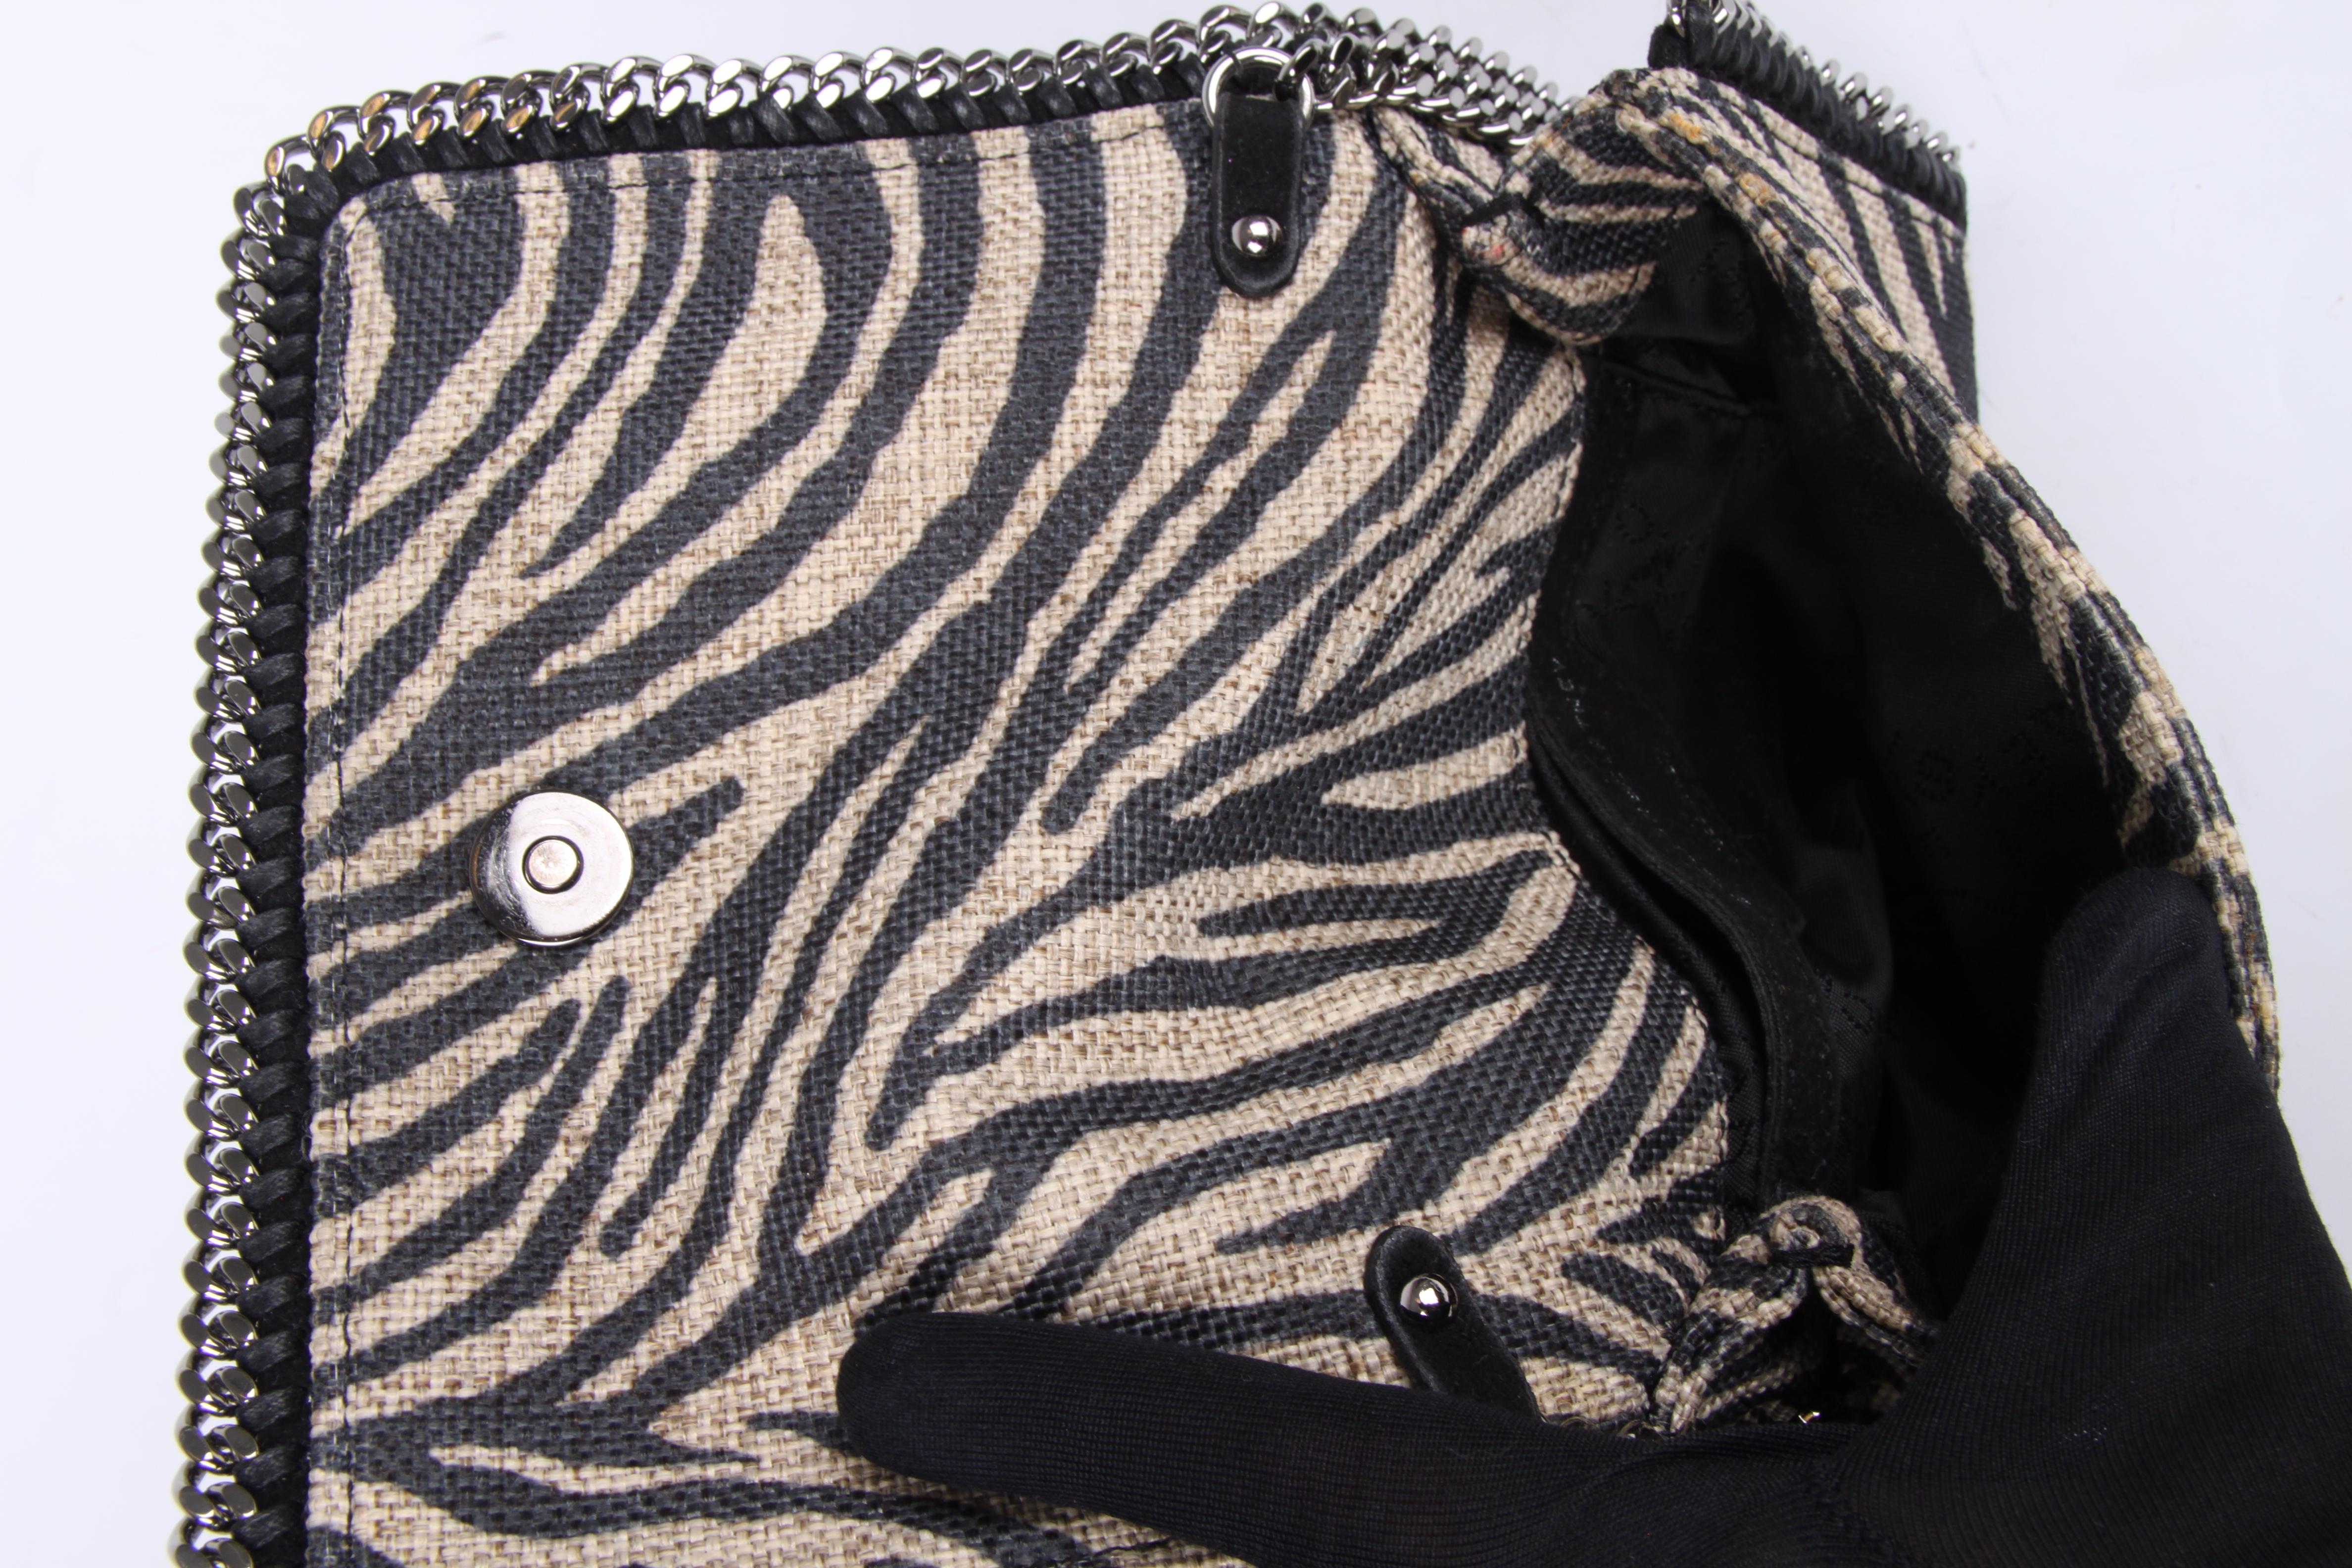 Women's Stella McCartney Falabella Zebra Shoulder Bag - beige/black